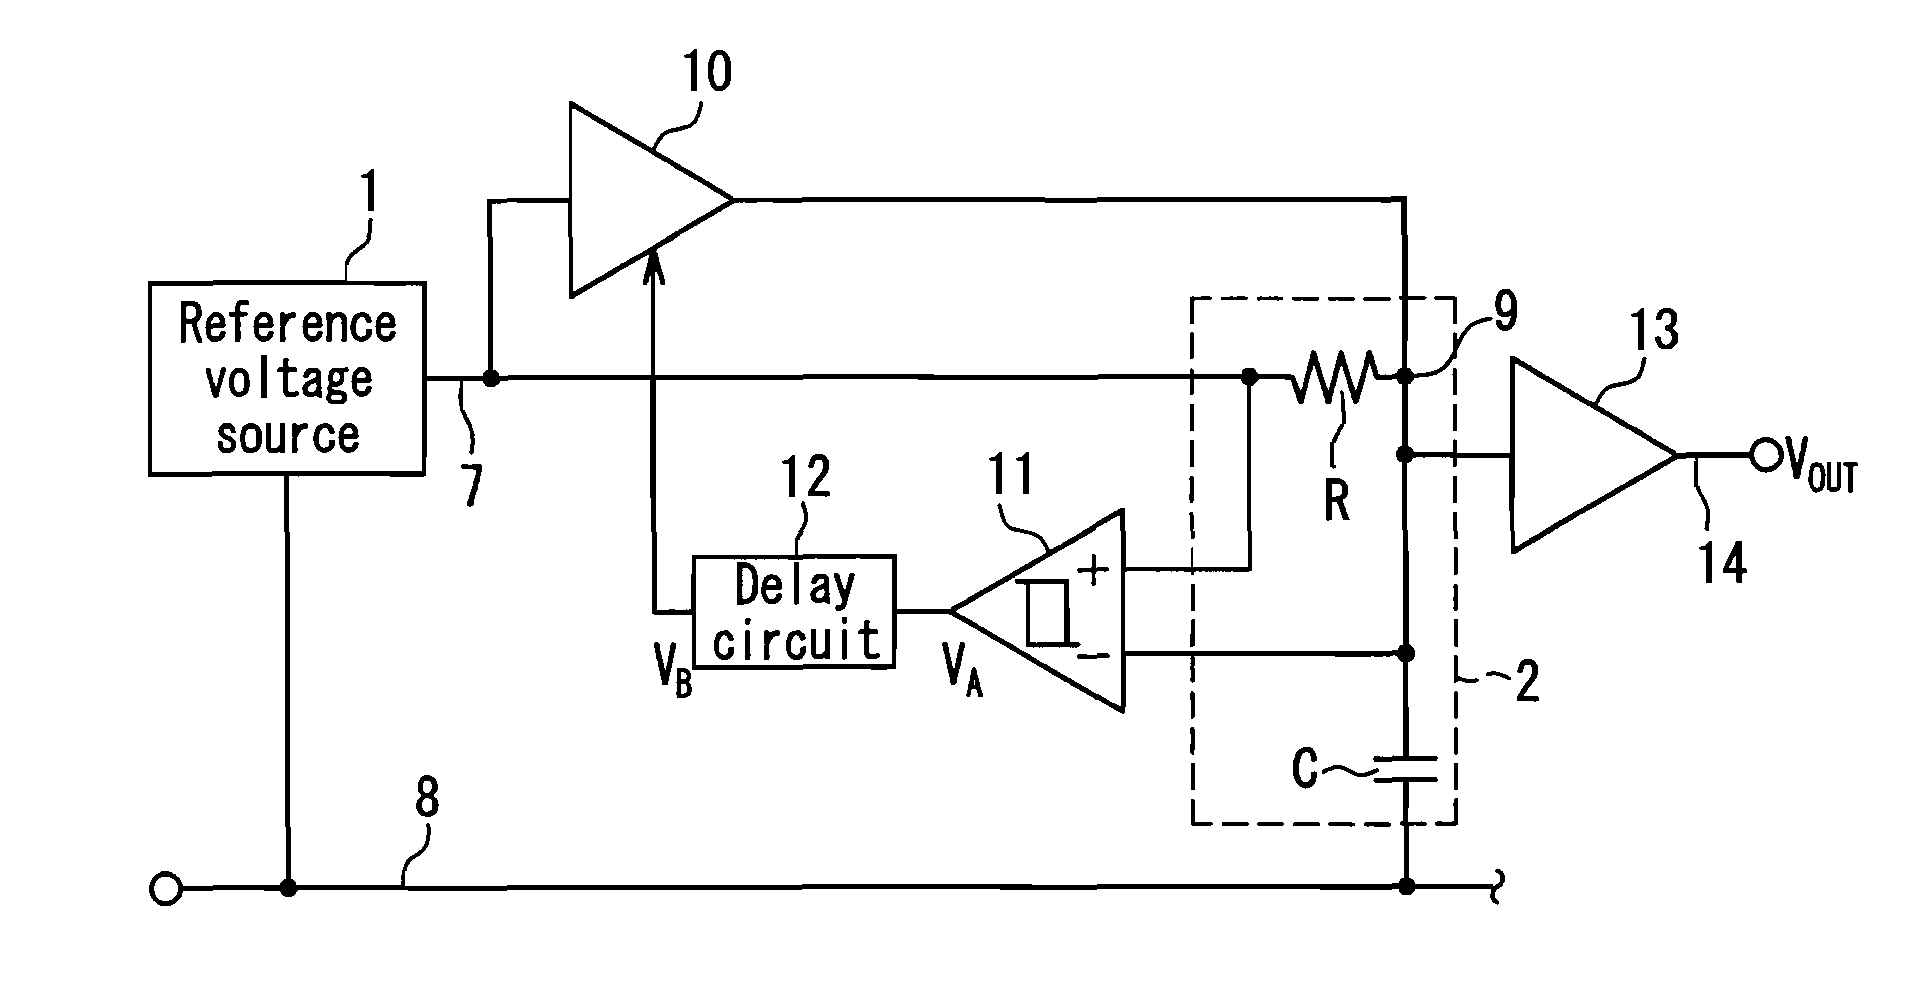 Reference voltage generator